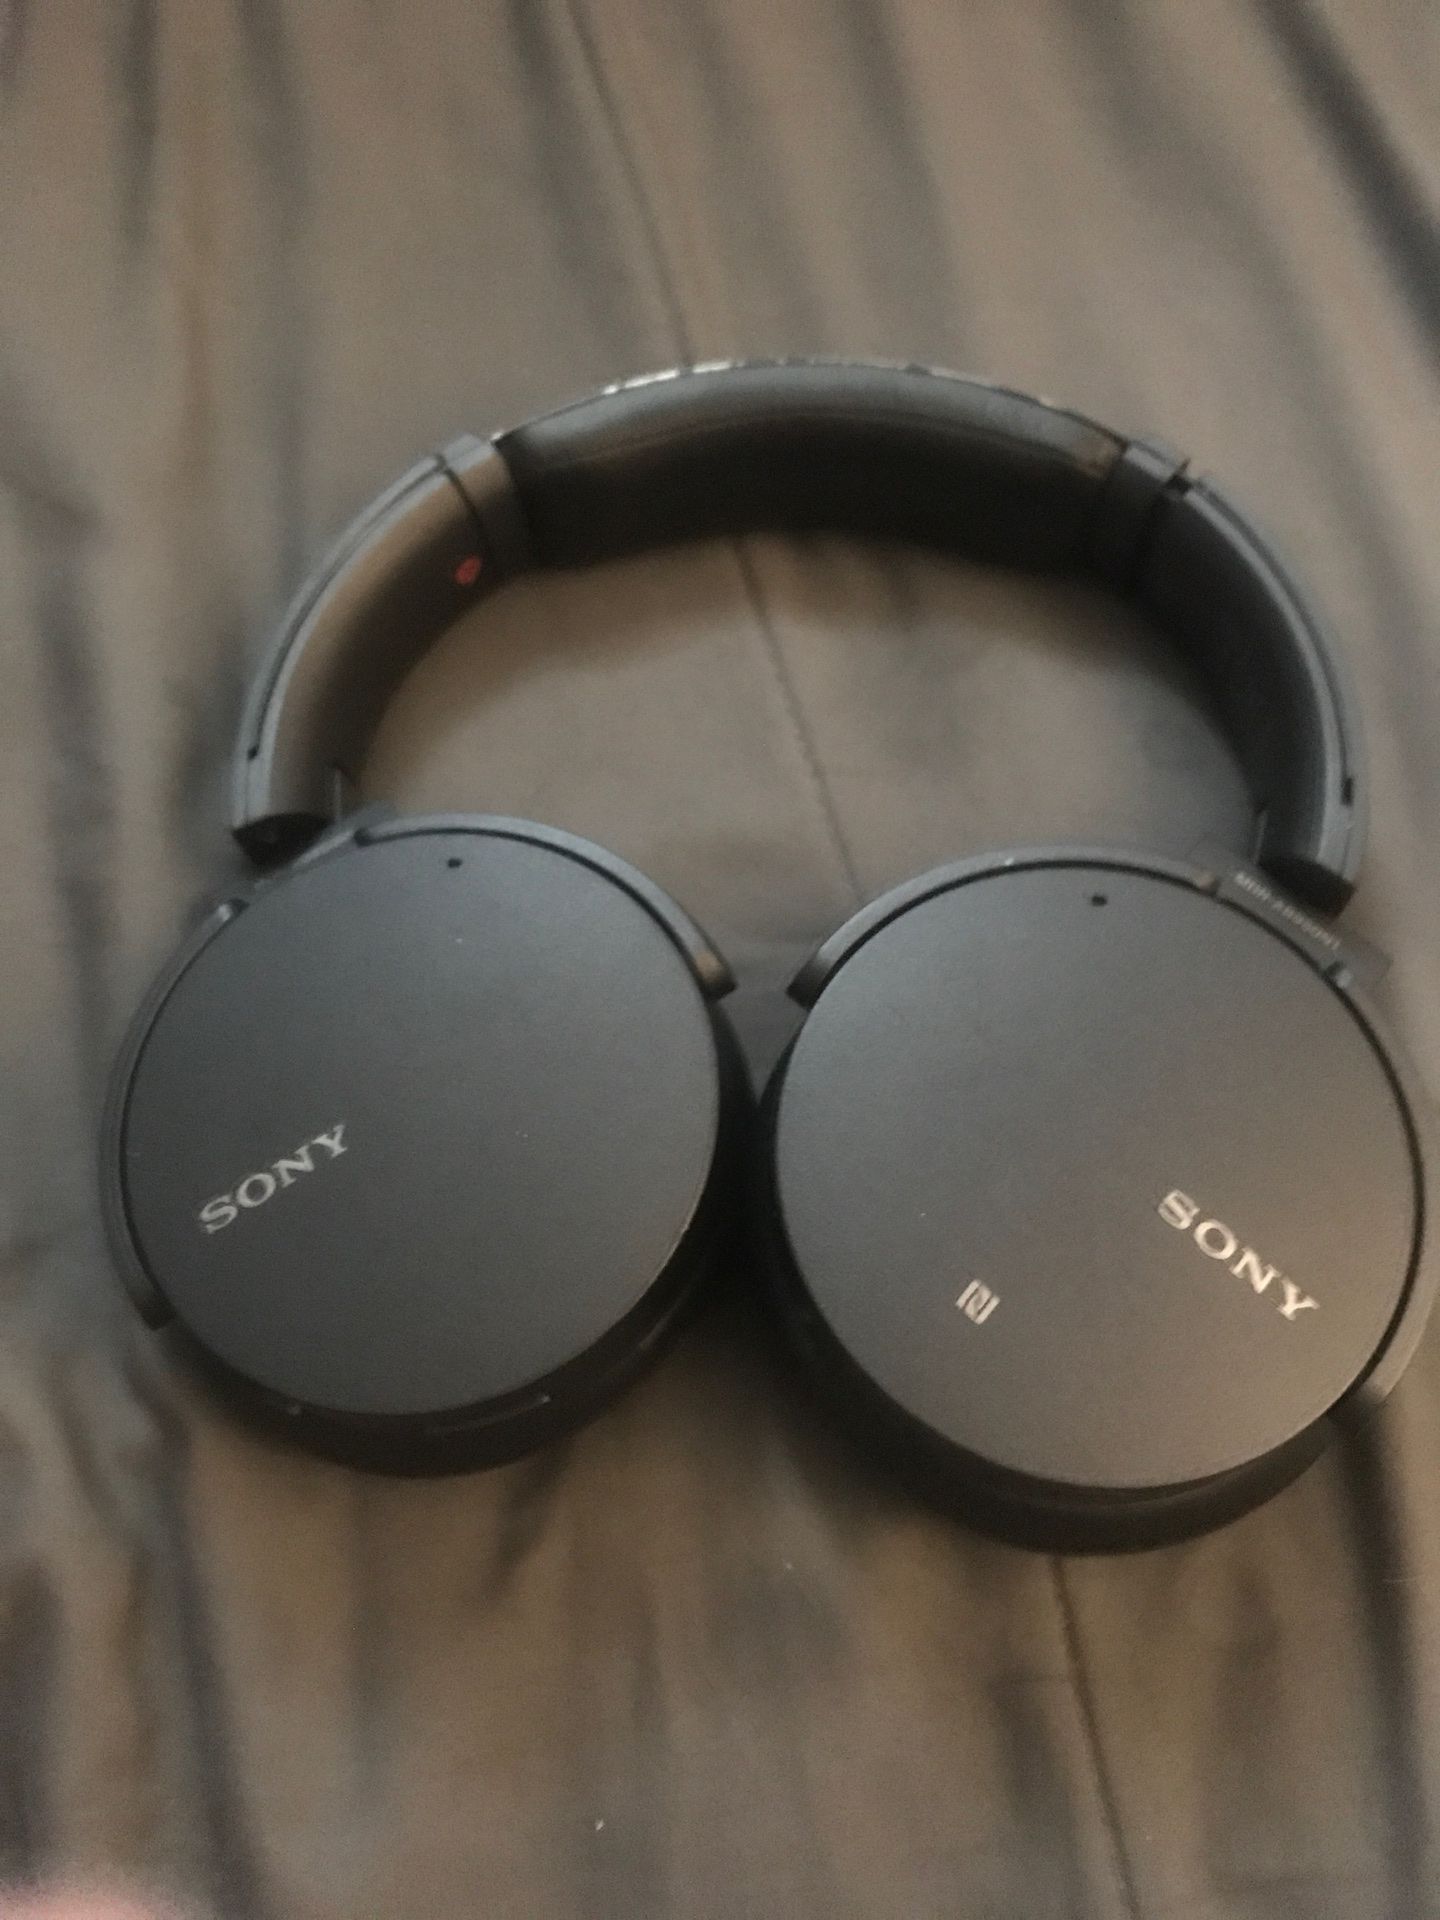 Sony bass headphones